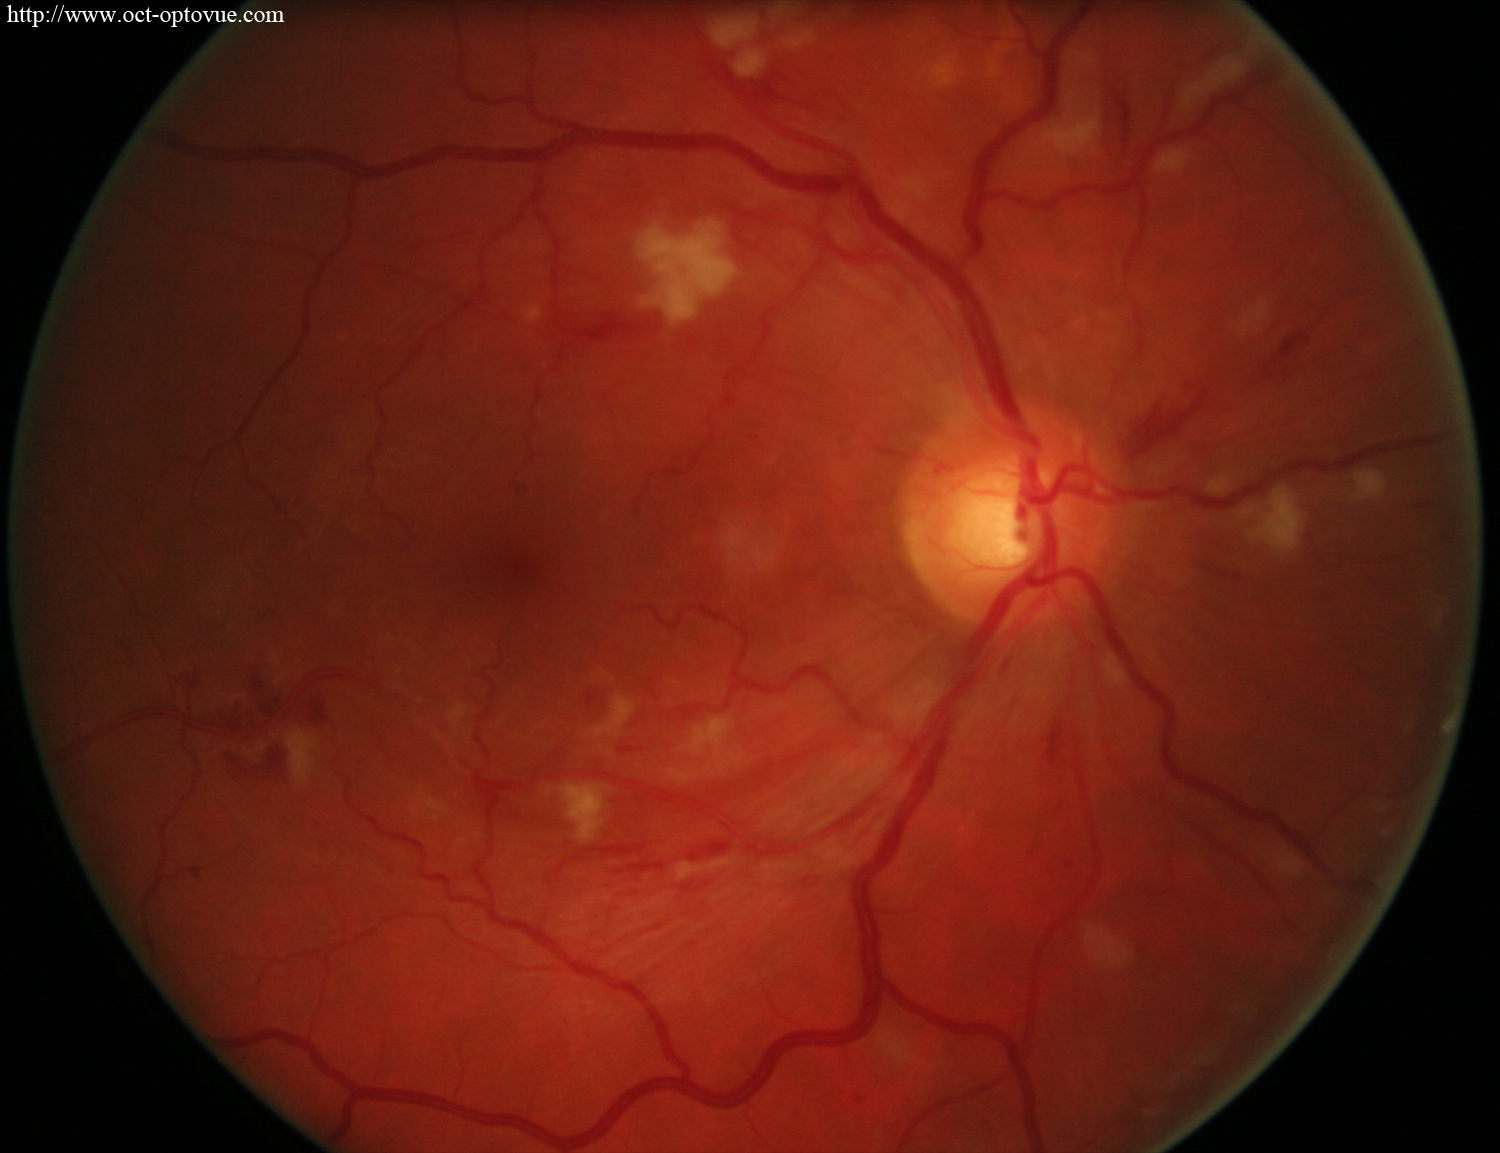 hypertensive retinopathy rétinopathie